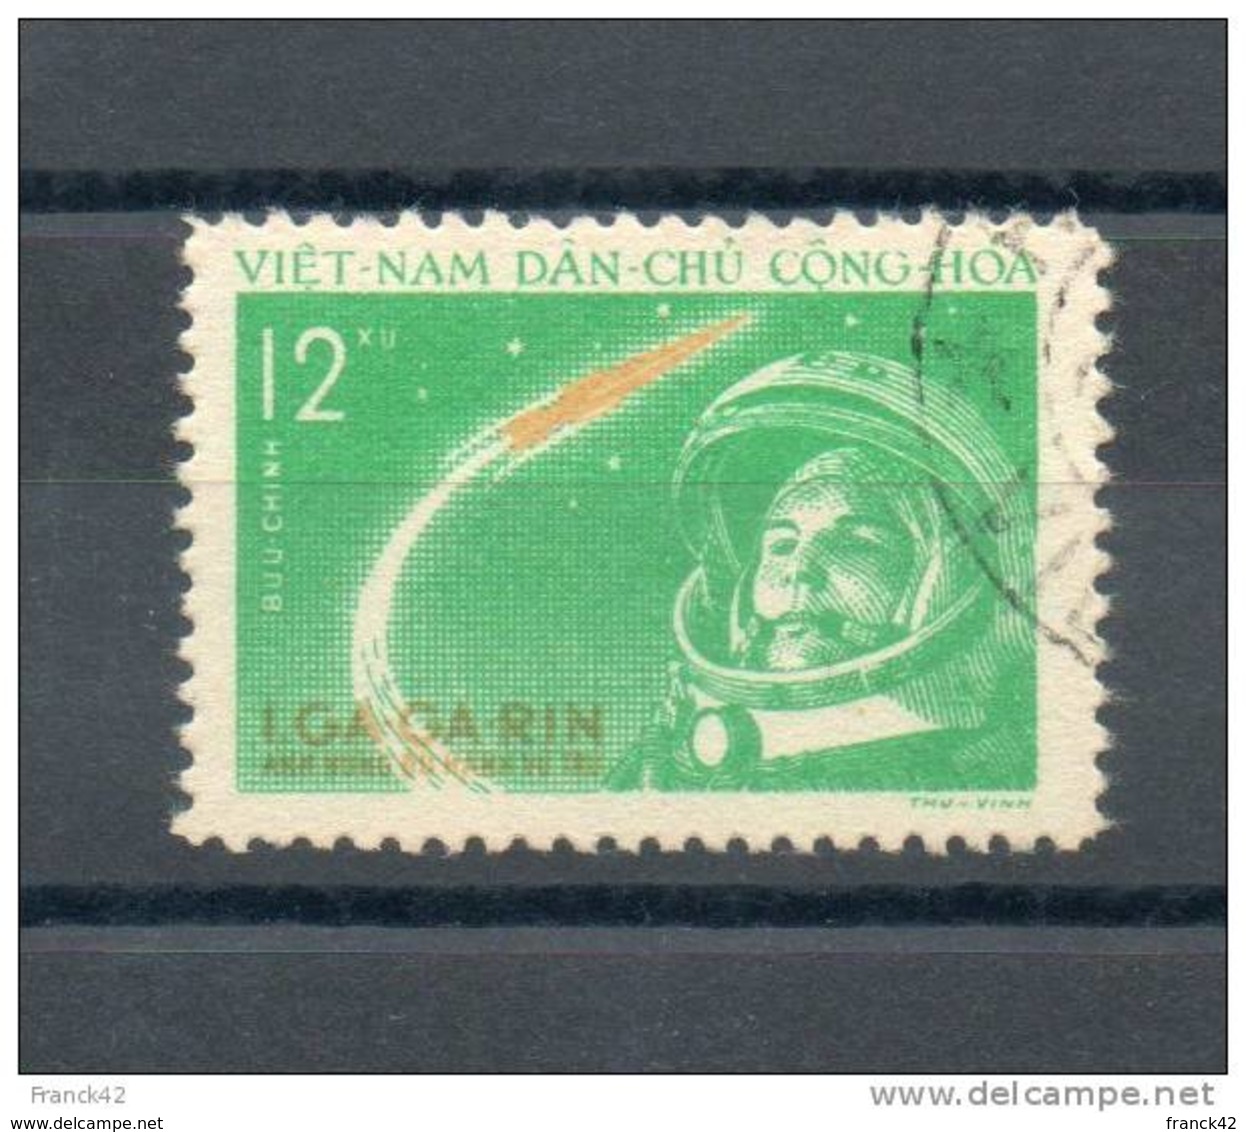 Vietnam. Gagarine - Vietnam